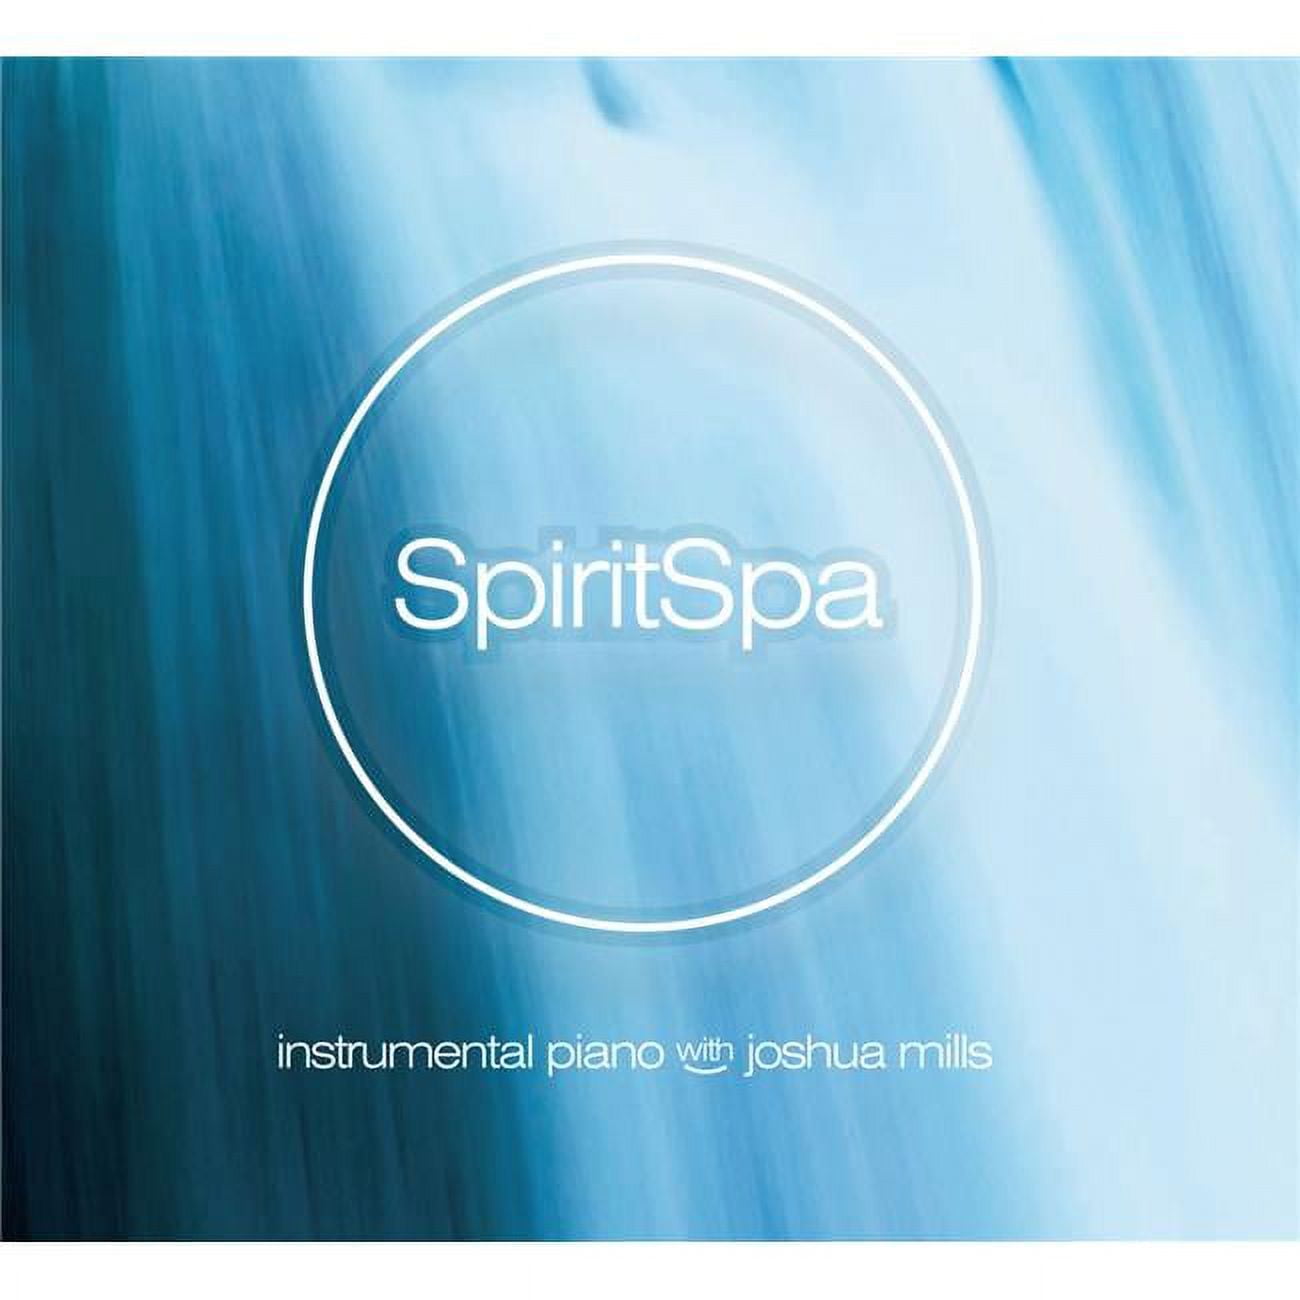 New Wine International 135173 Audio Cd - Spirit Spa